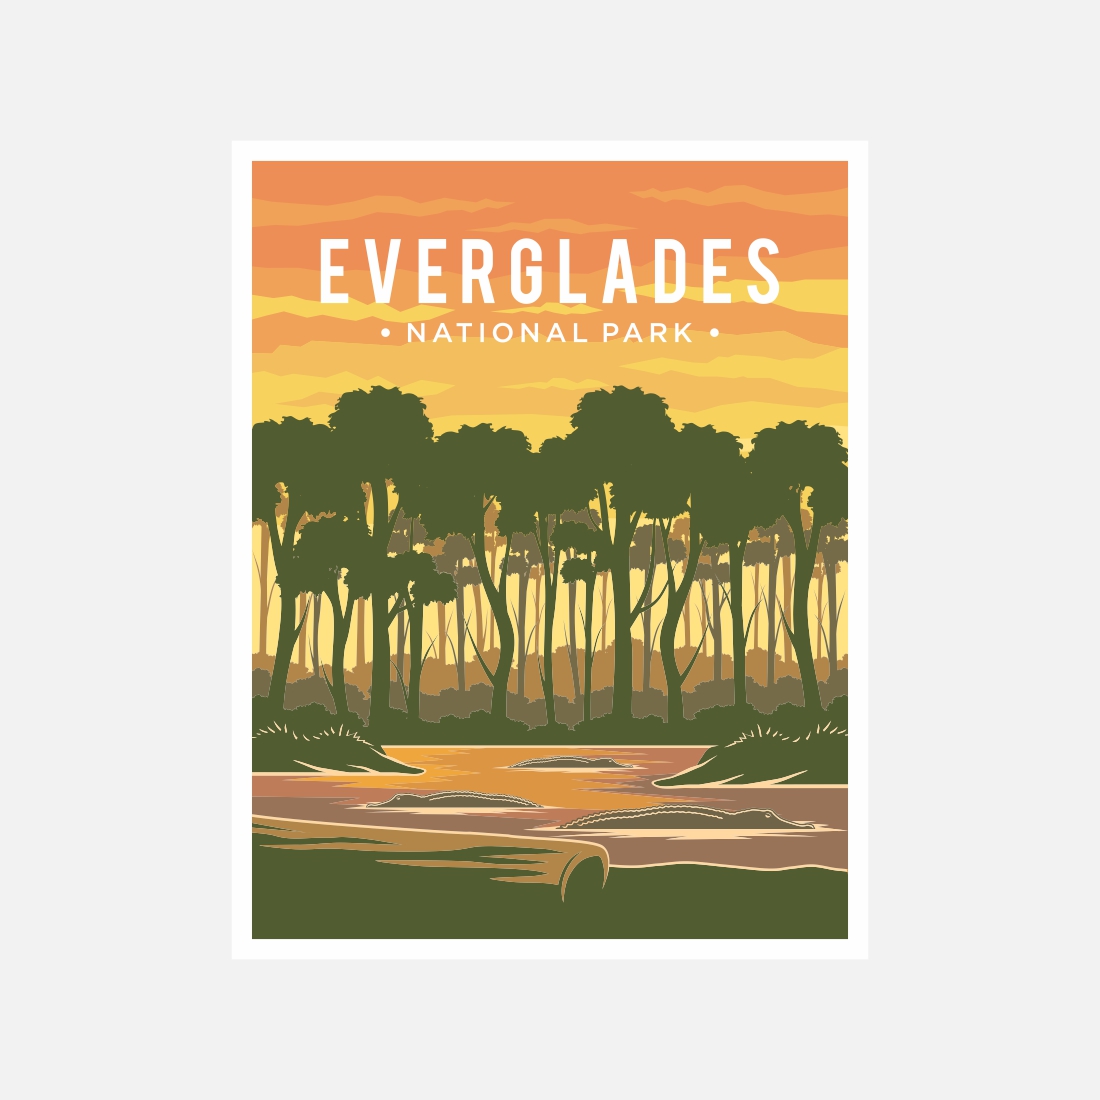 Everglades National Park poster vector illustration design – Only $8 preview image.